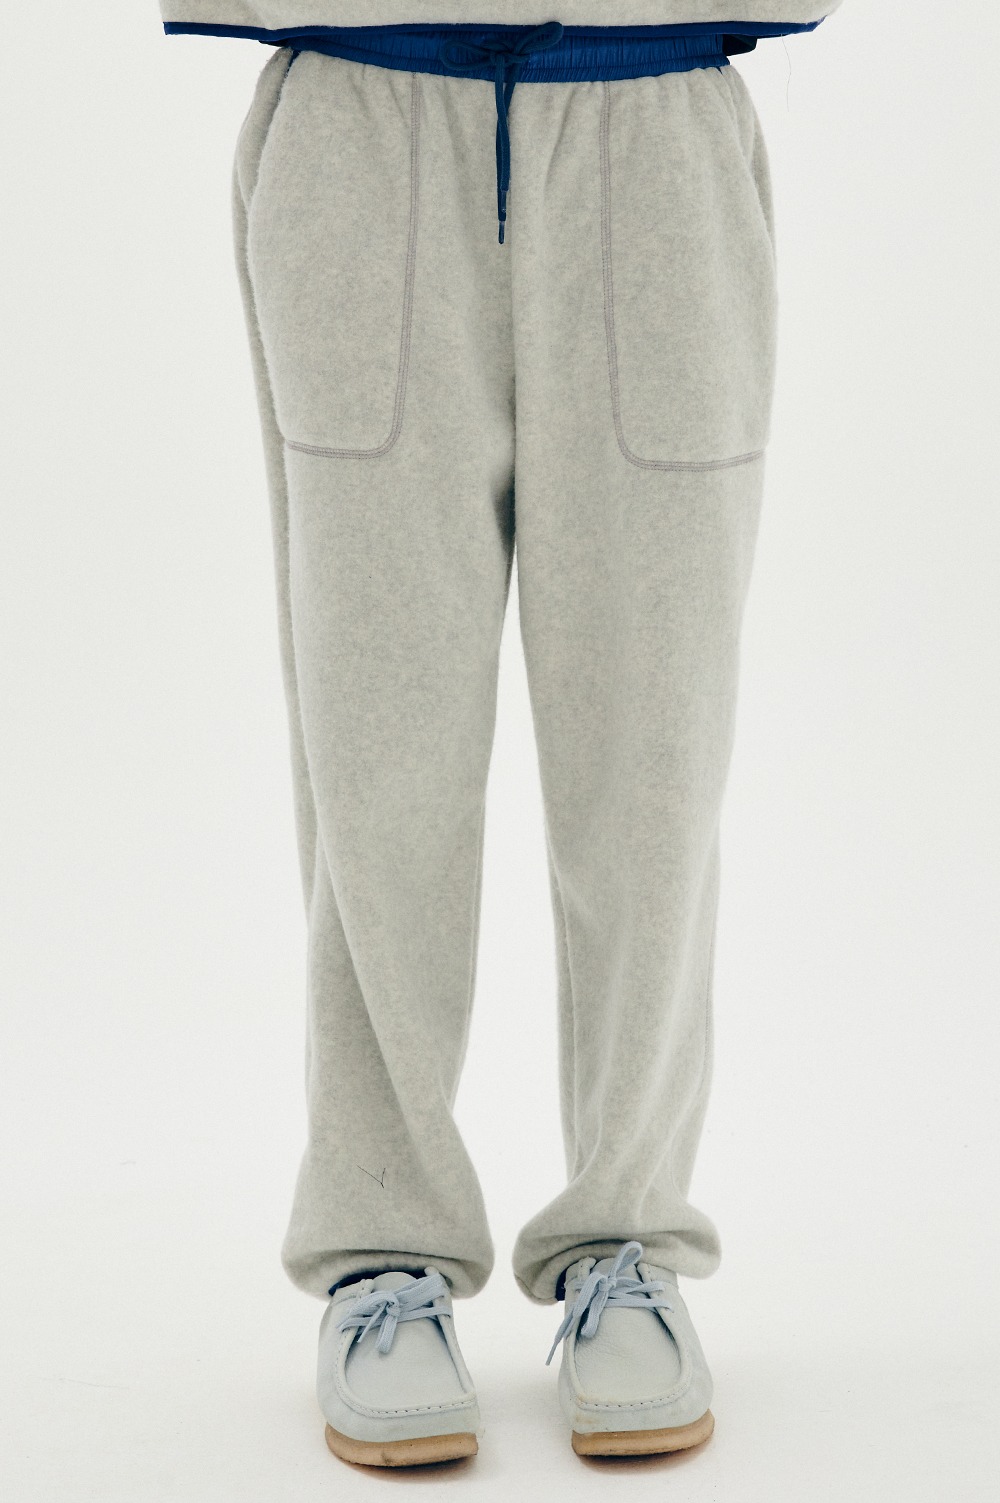 clove - [12/13(화) 예약배송][22FW clove] Colored Fleece Pants_Women (Light Grey)